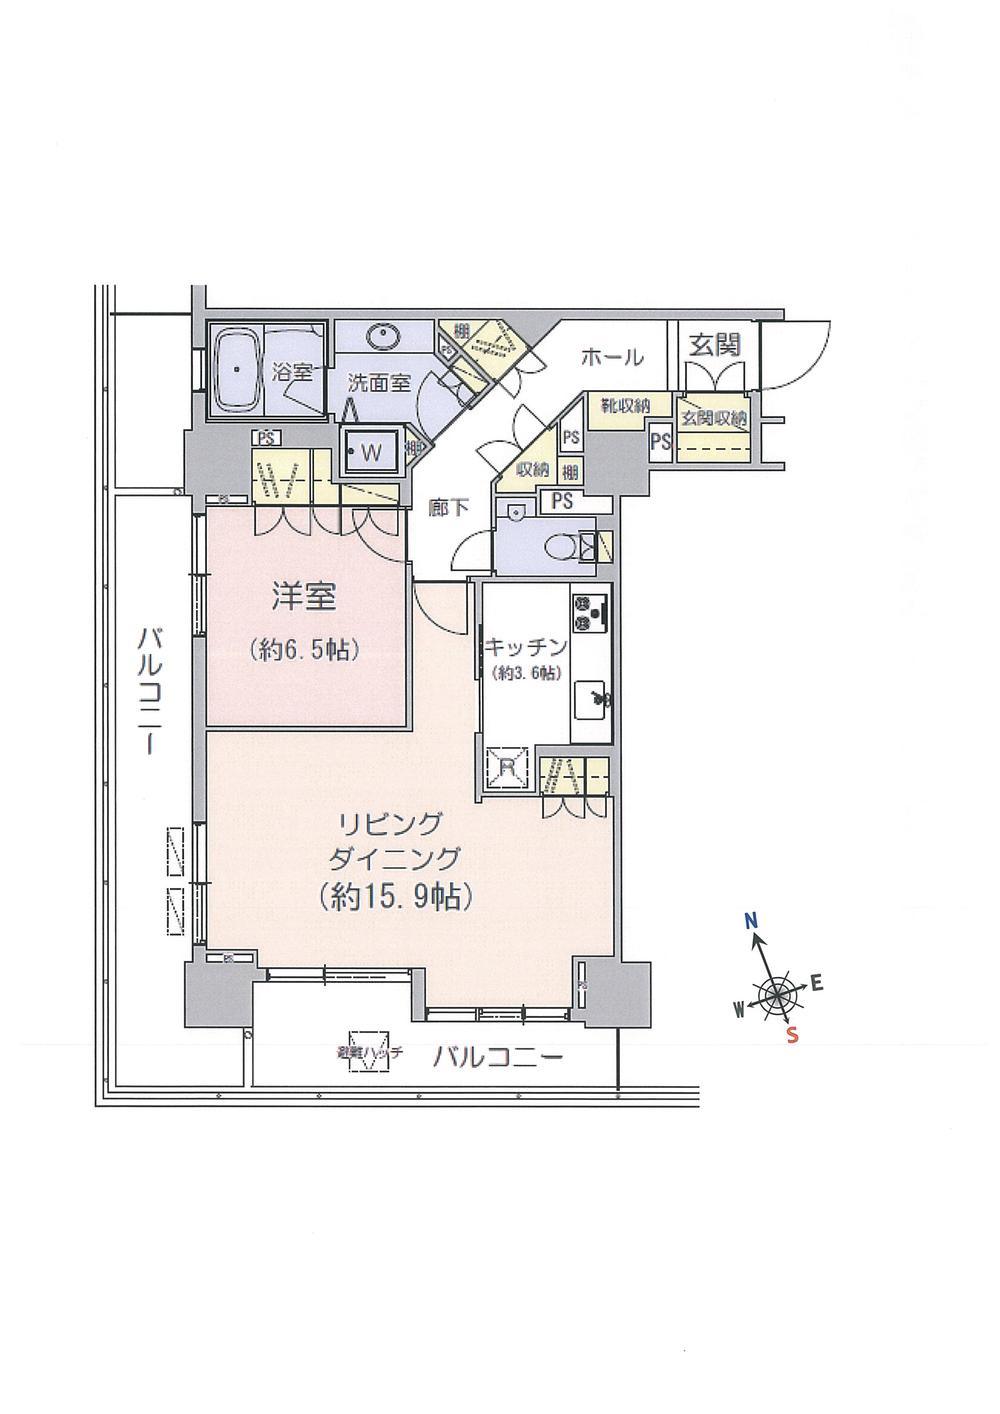 Floor plan. 1LDK, Price 59,800,000 yen, Occupied area 69.03 sq m , Balcony area 26.23 sq m